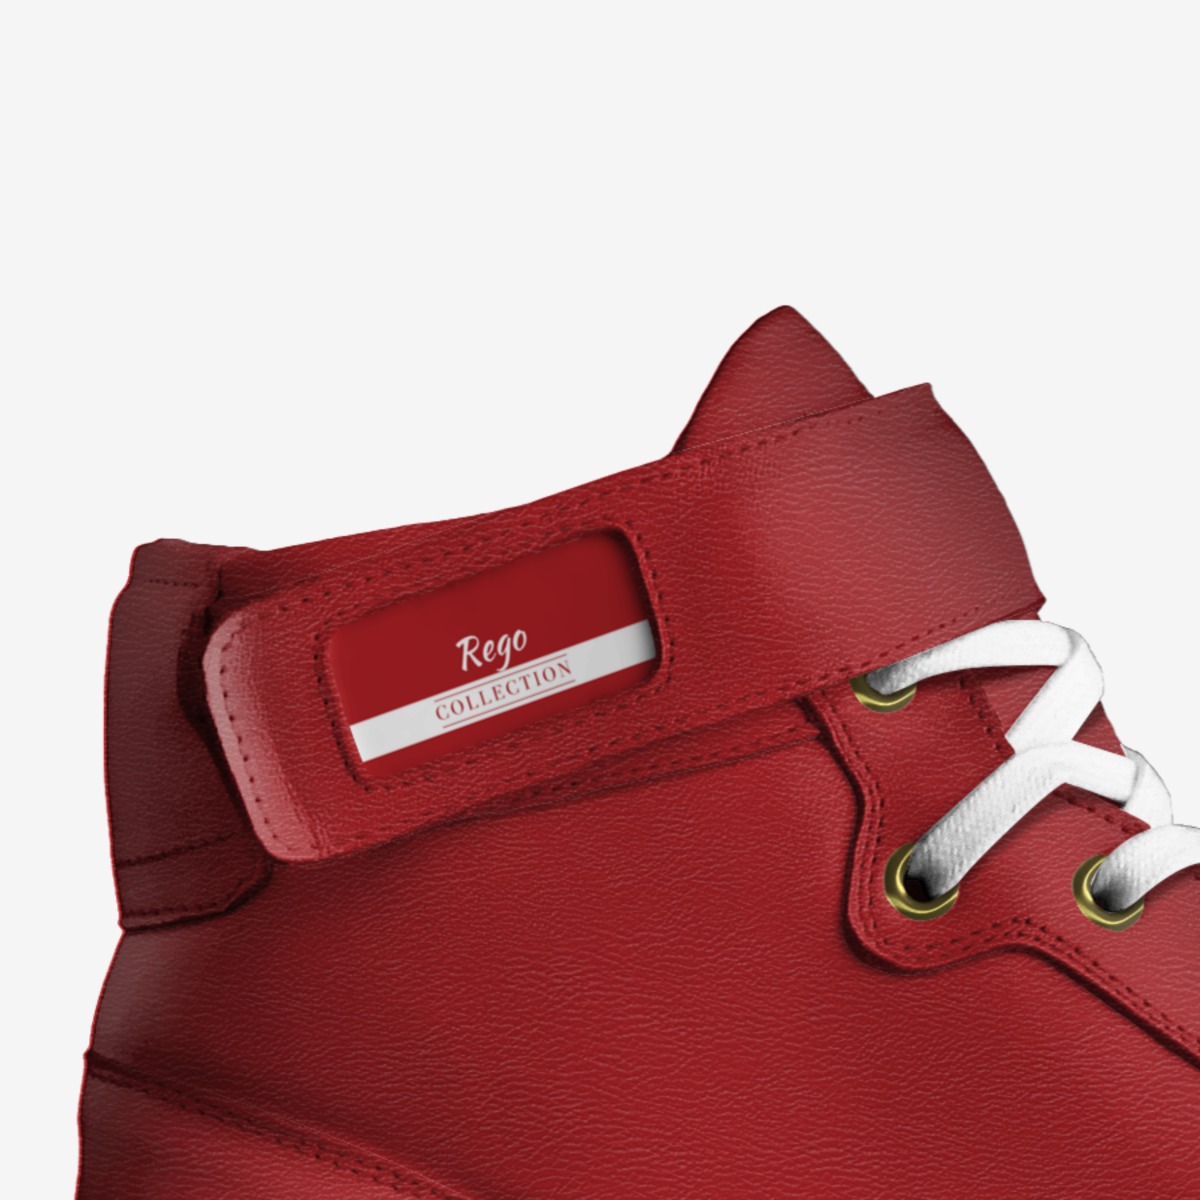 Rego | A Custom Shoe concept by Monica Yessel Aguilar Martinez